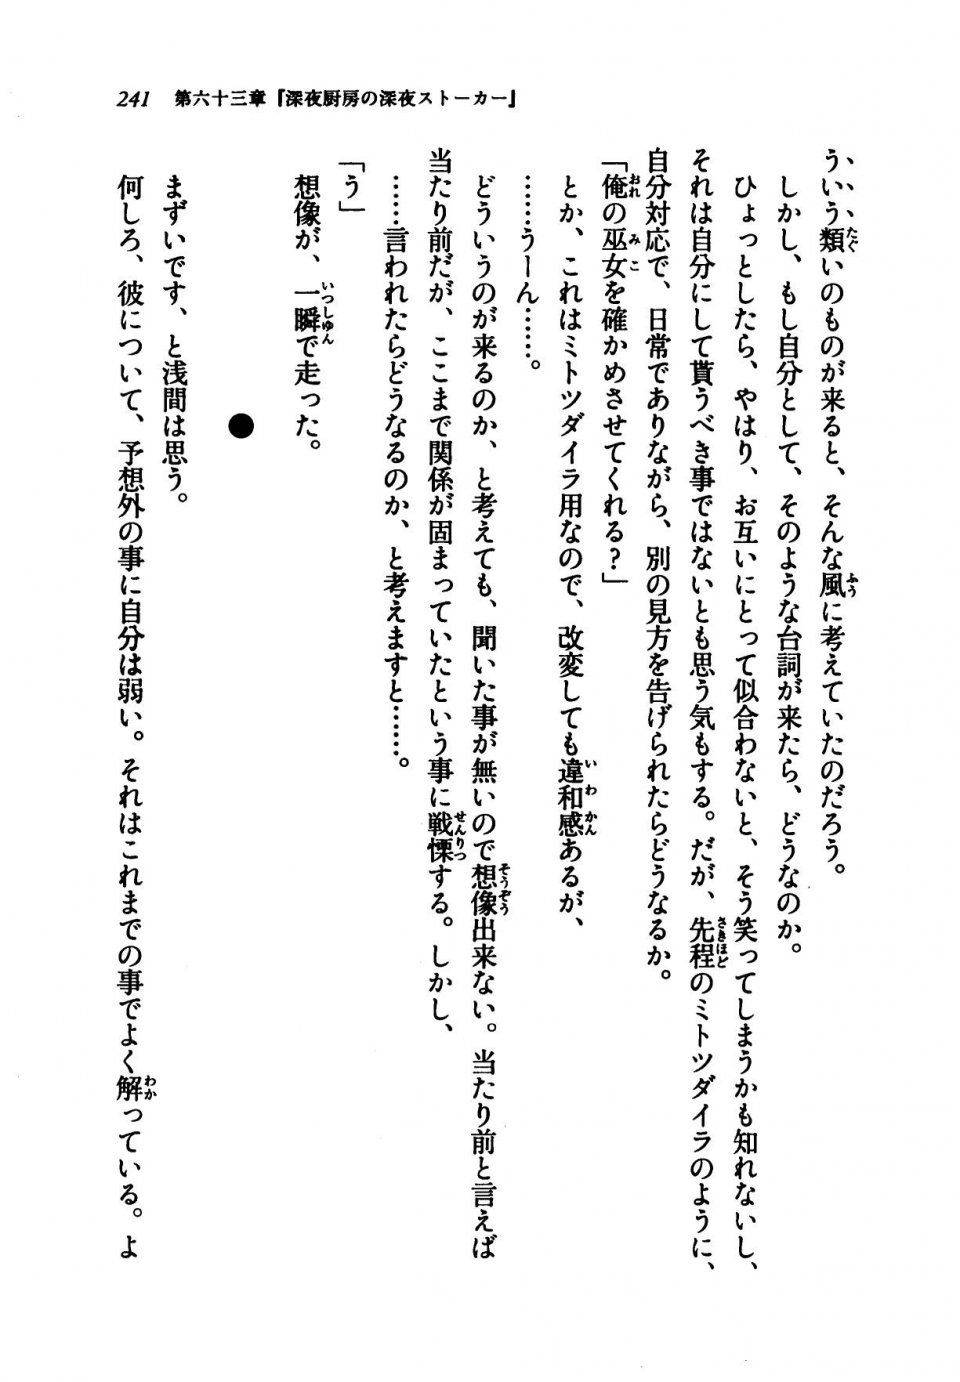 Kyoukai Senjou no Horizon LN Vol 21(8C) Part 1 - Photo #240